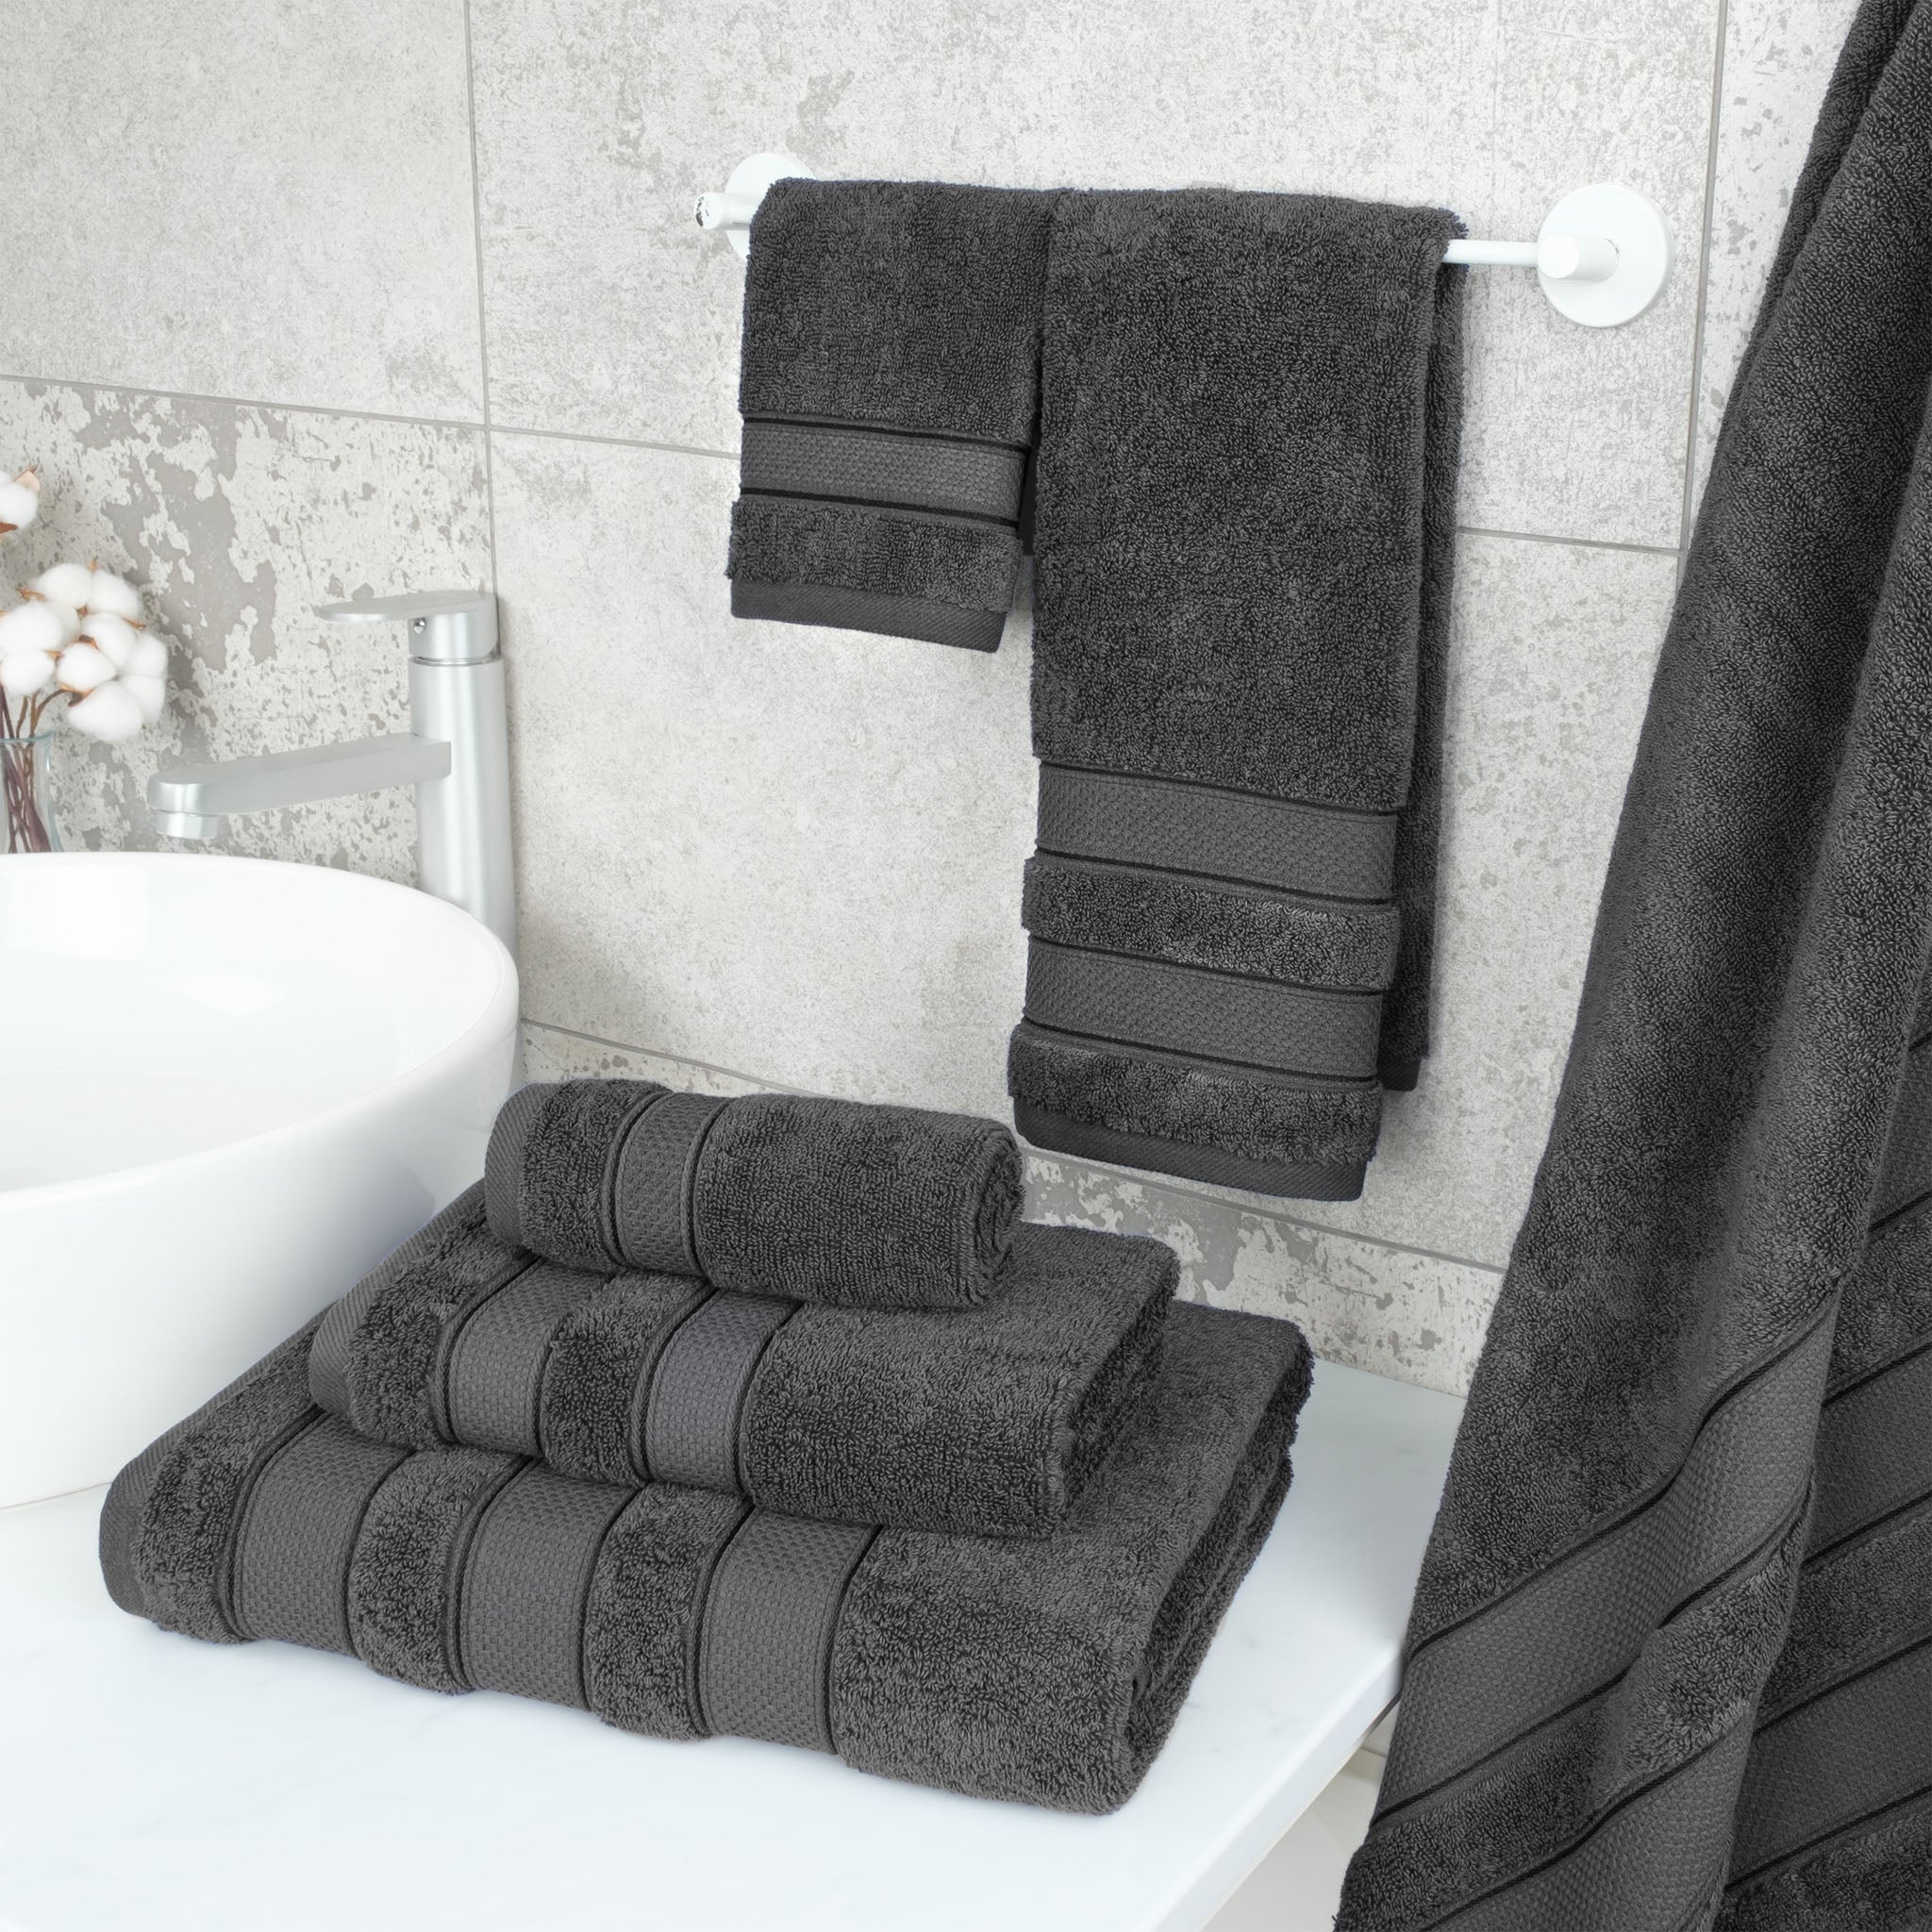 American Soft Linen Bath Towel Set, 4 Piece 100% Turkish Cotton Bath Towels,  27x54 inches Super Soft Towels for Bathroom, White Edis4BathSageE136 - The  Home Depot